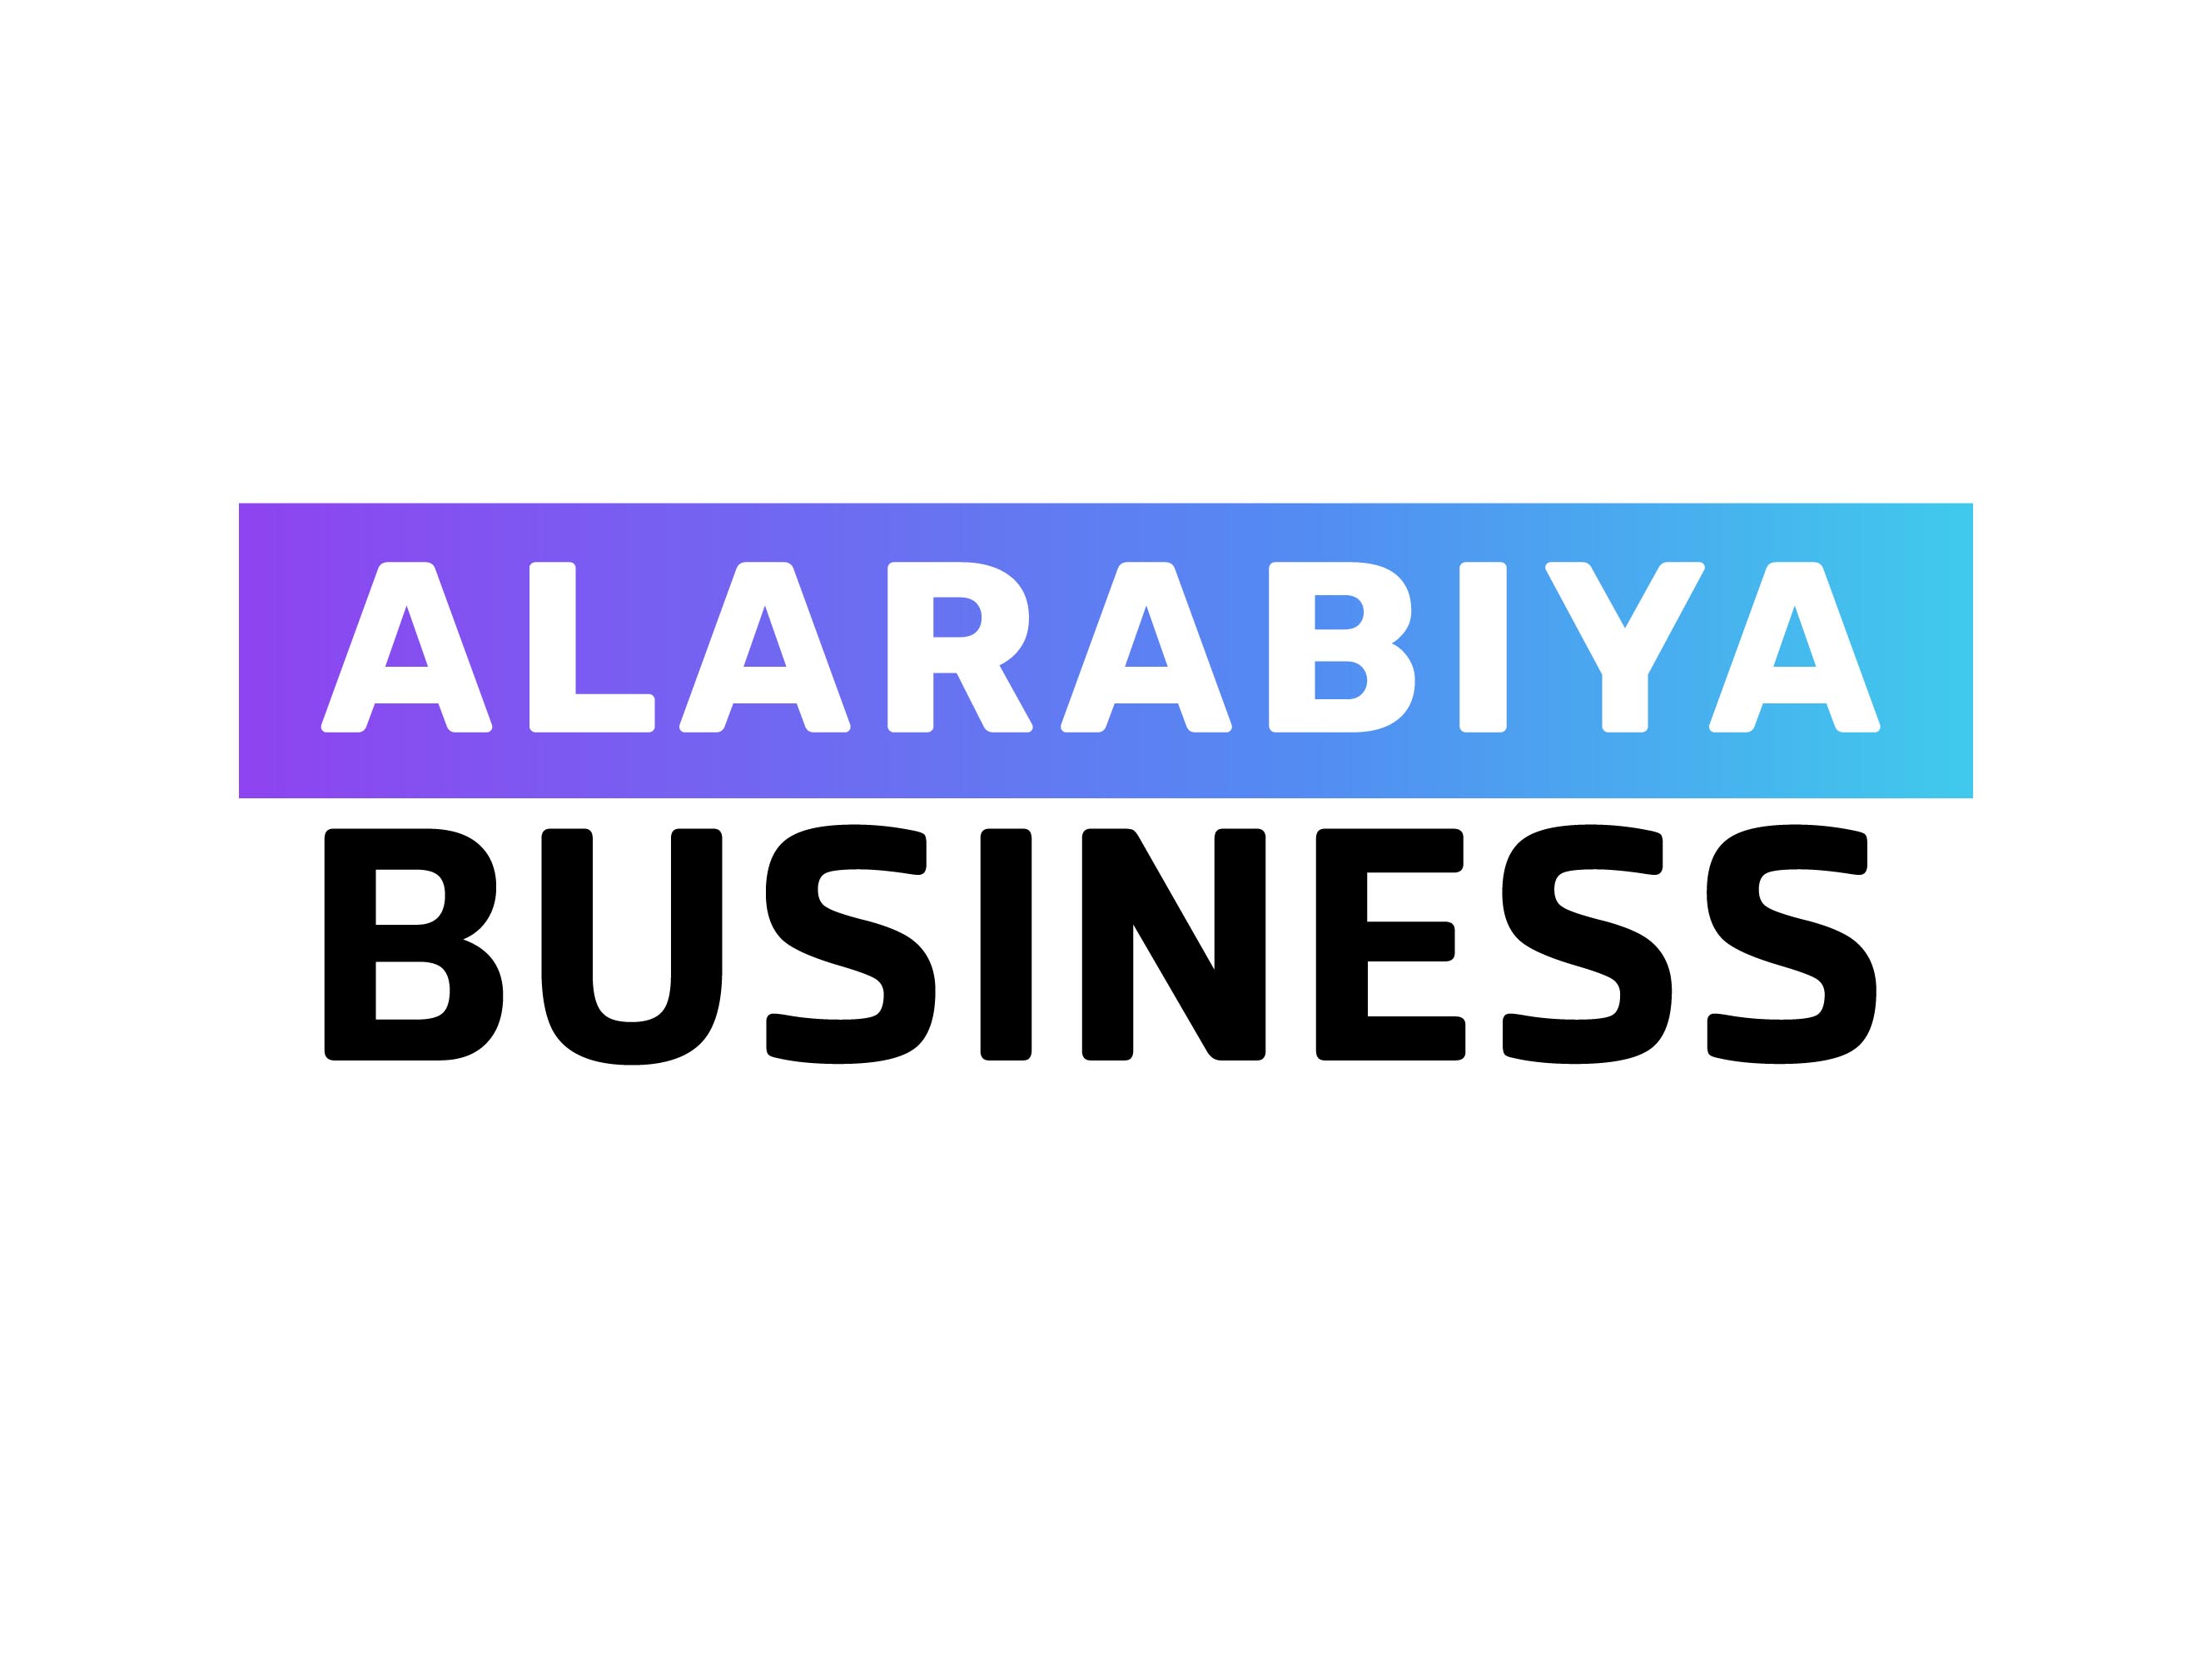 Al Arabiya Network launches Al Arabiya Business